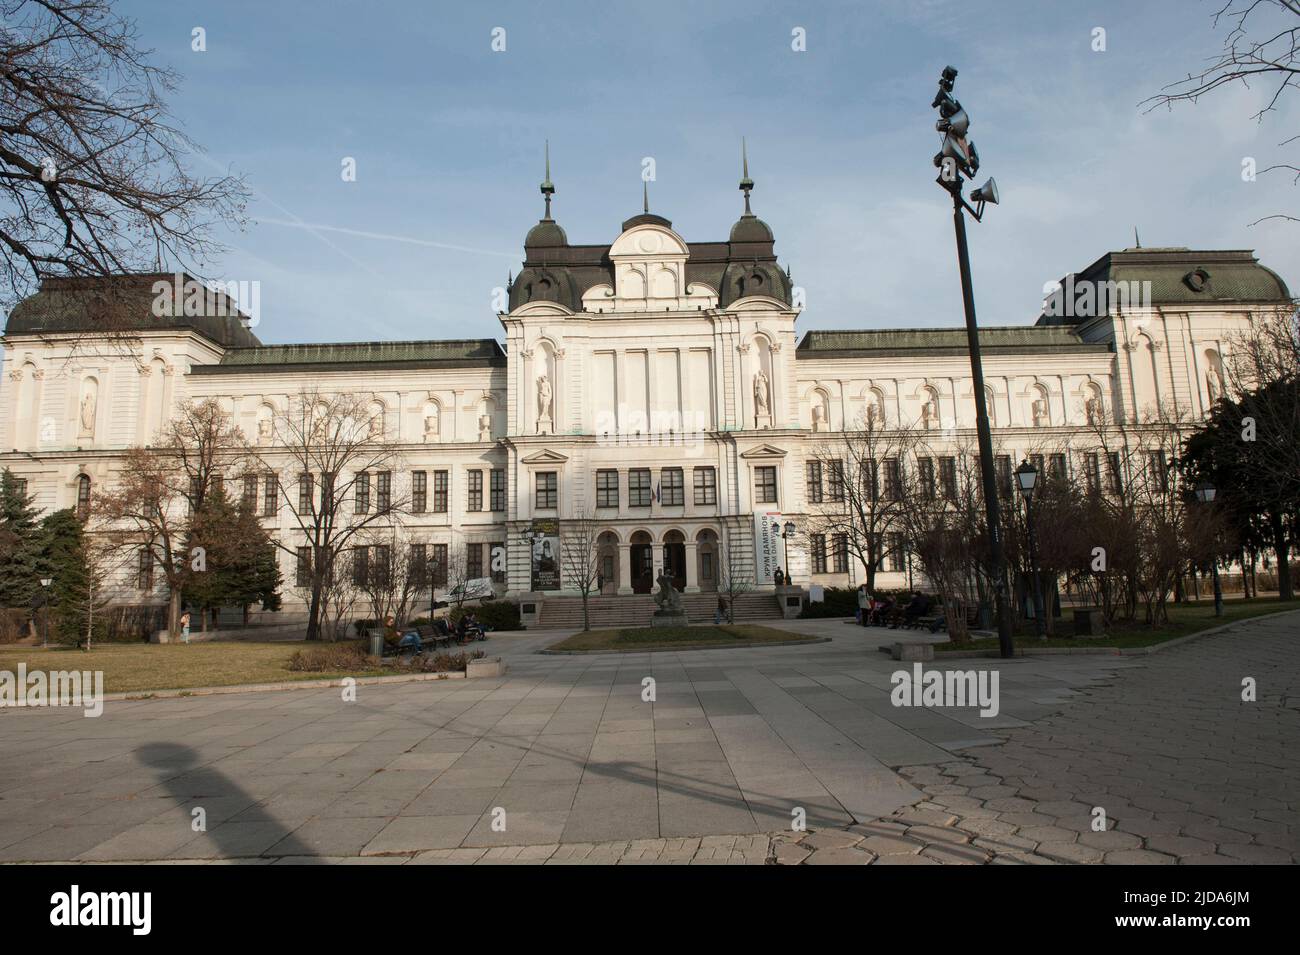 National Gallery for Foreign Art, Sofia, Bulgaria. Landmarks of the Bulgarian capital, Sofia. Stock Photo